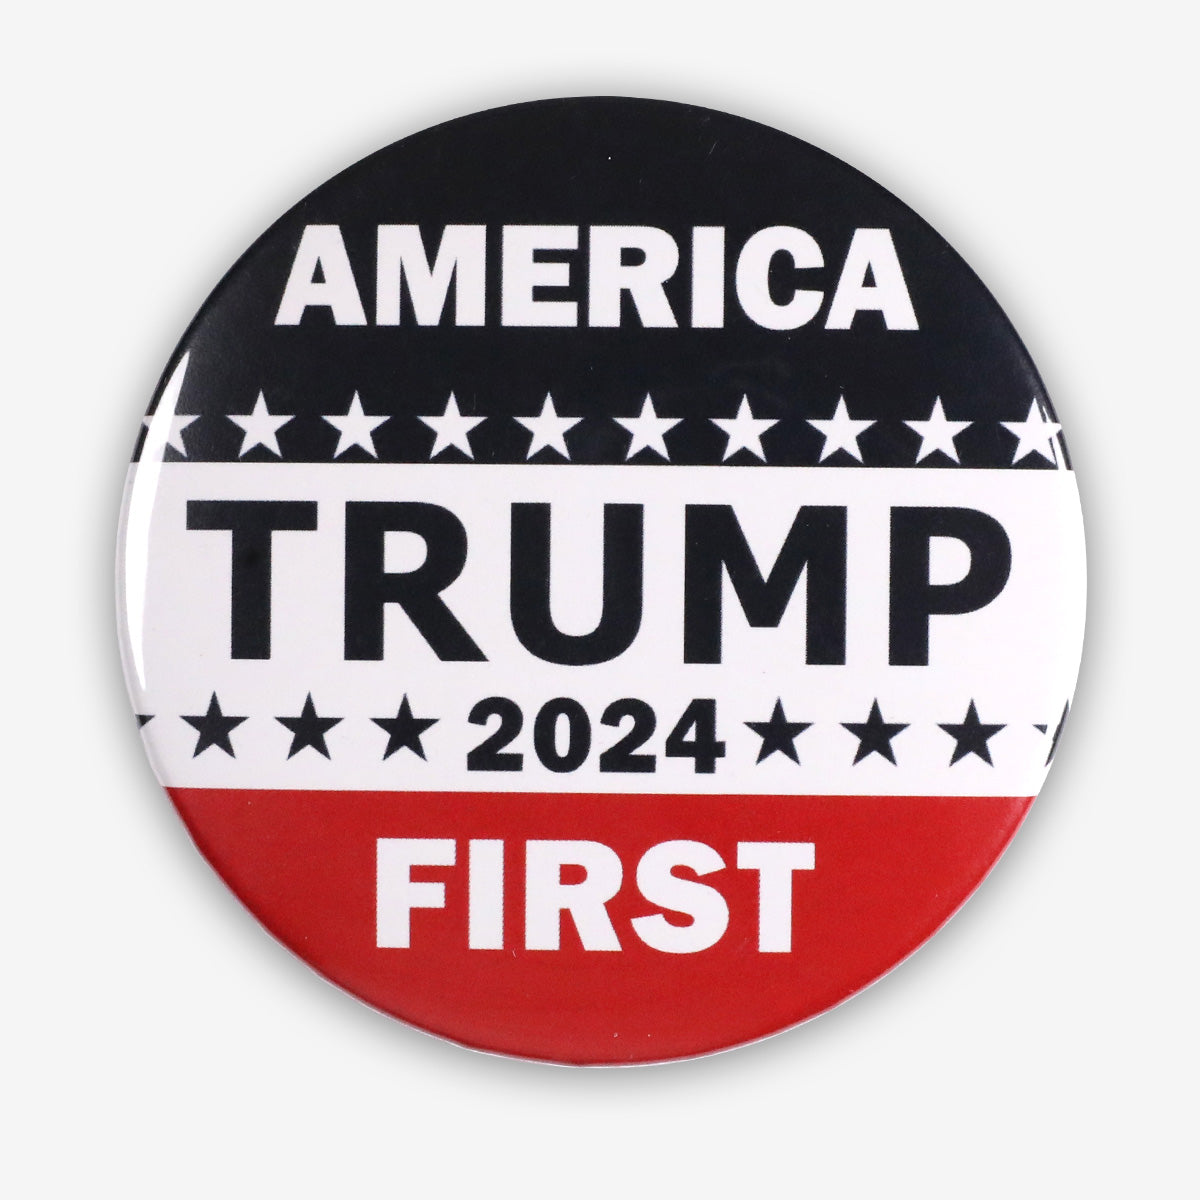 Trump 2024 Button - America First